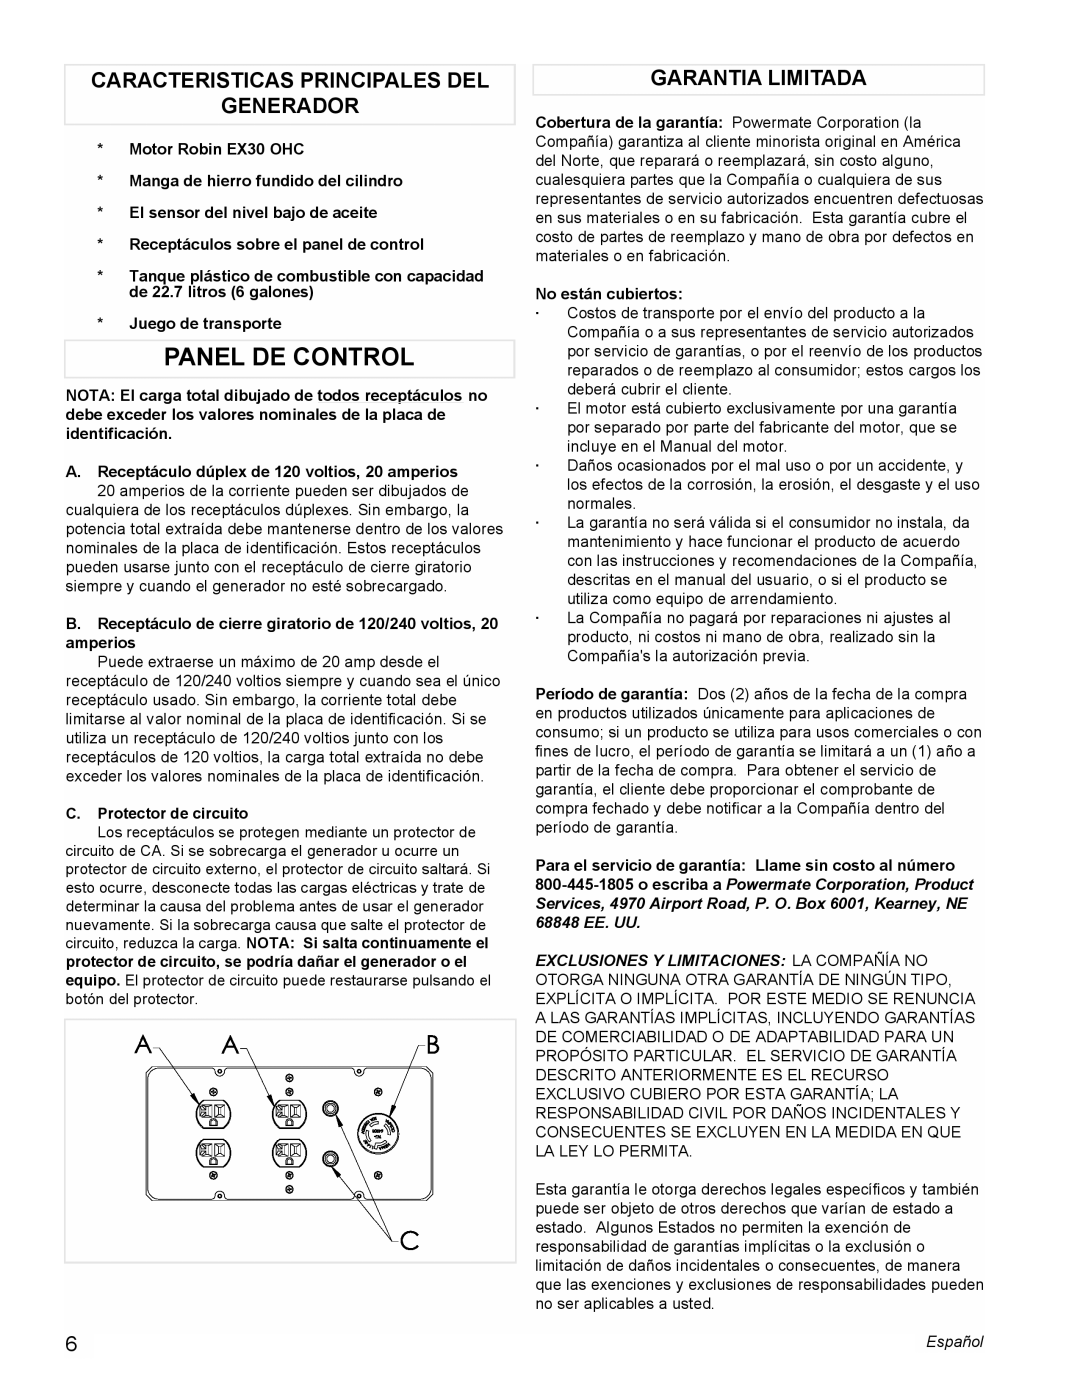 Coleman PM0435005 manual Panel De Control, Caracteristicas Principales Del Generador, Garantia Limitada 